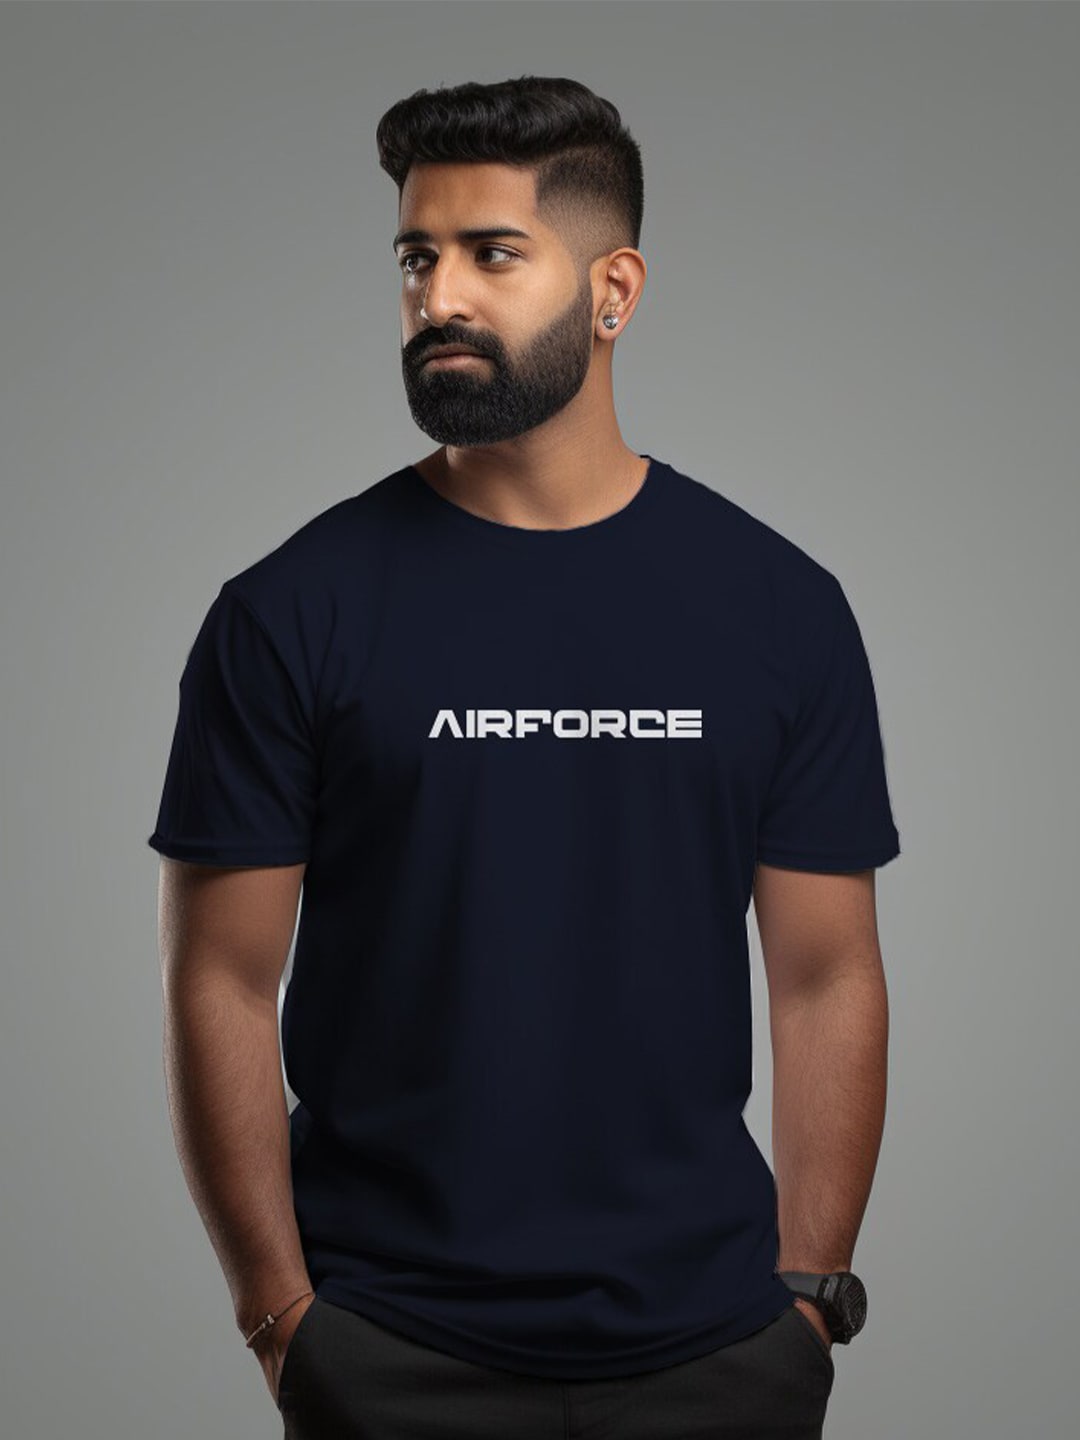 Aero Armour Unisex Airforce Pride Printed Pure Cotton T-shirt Price in India